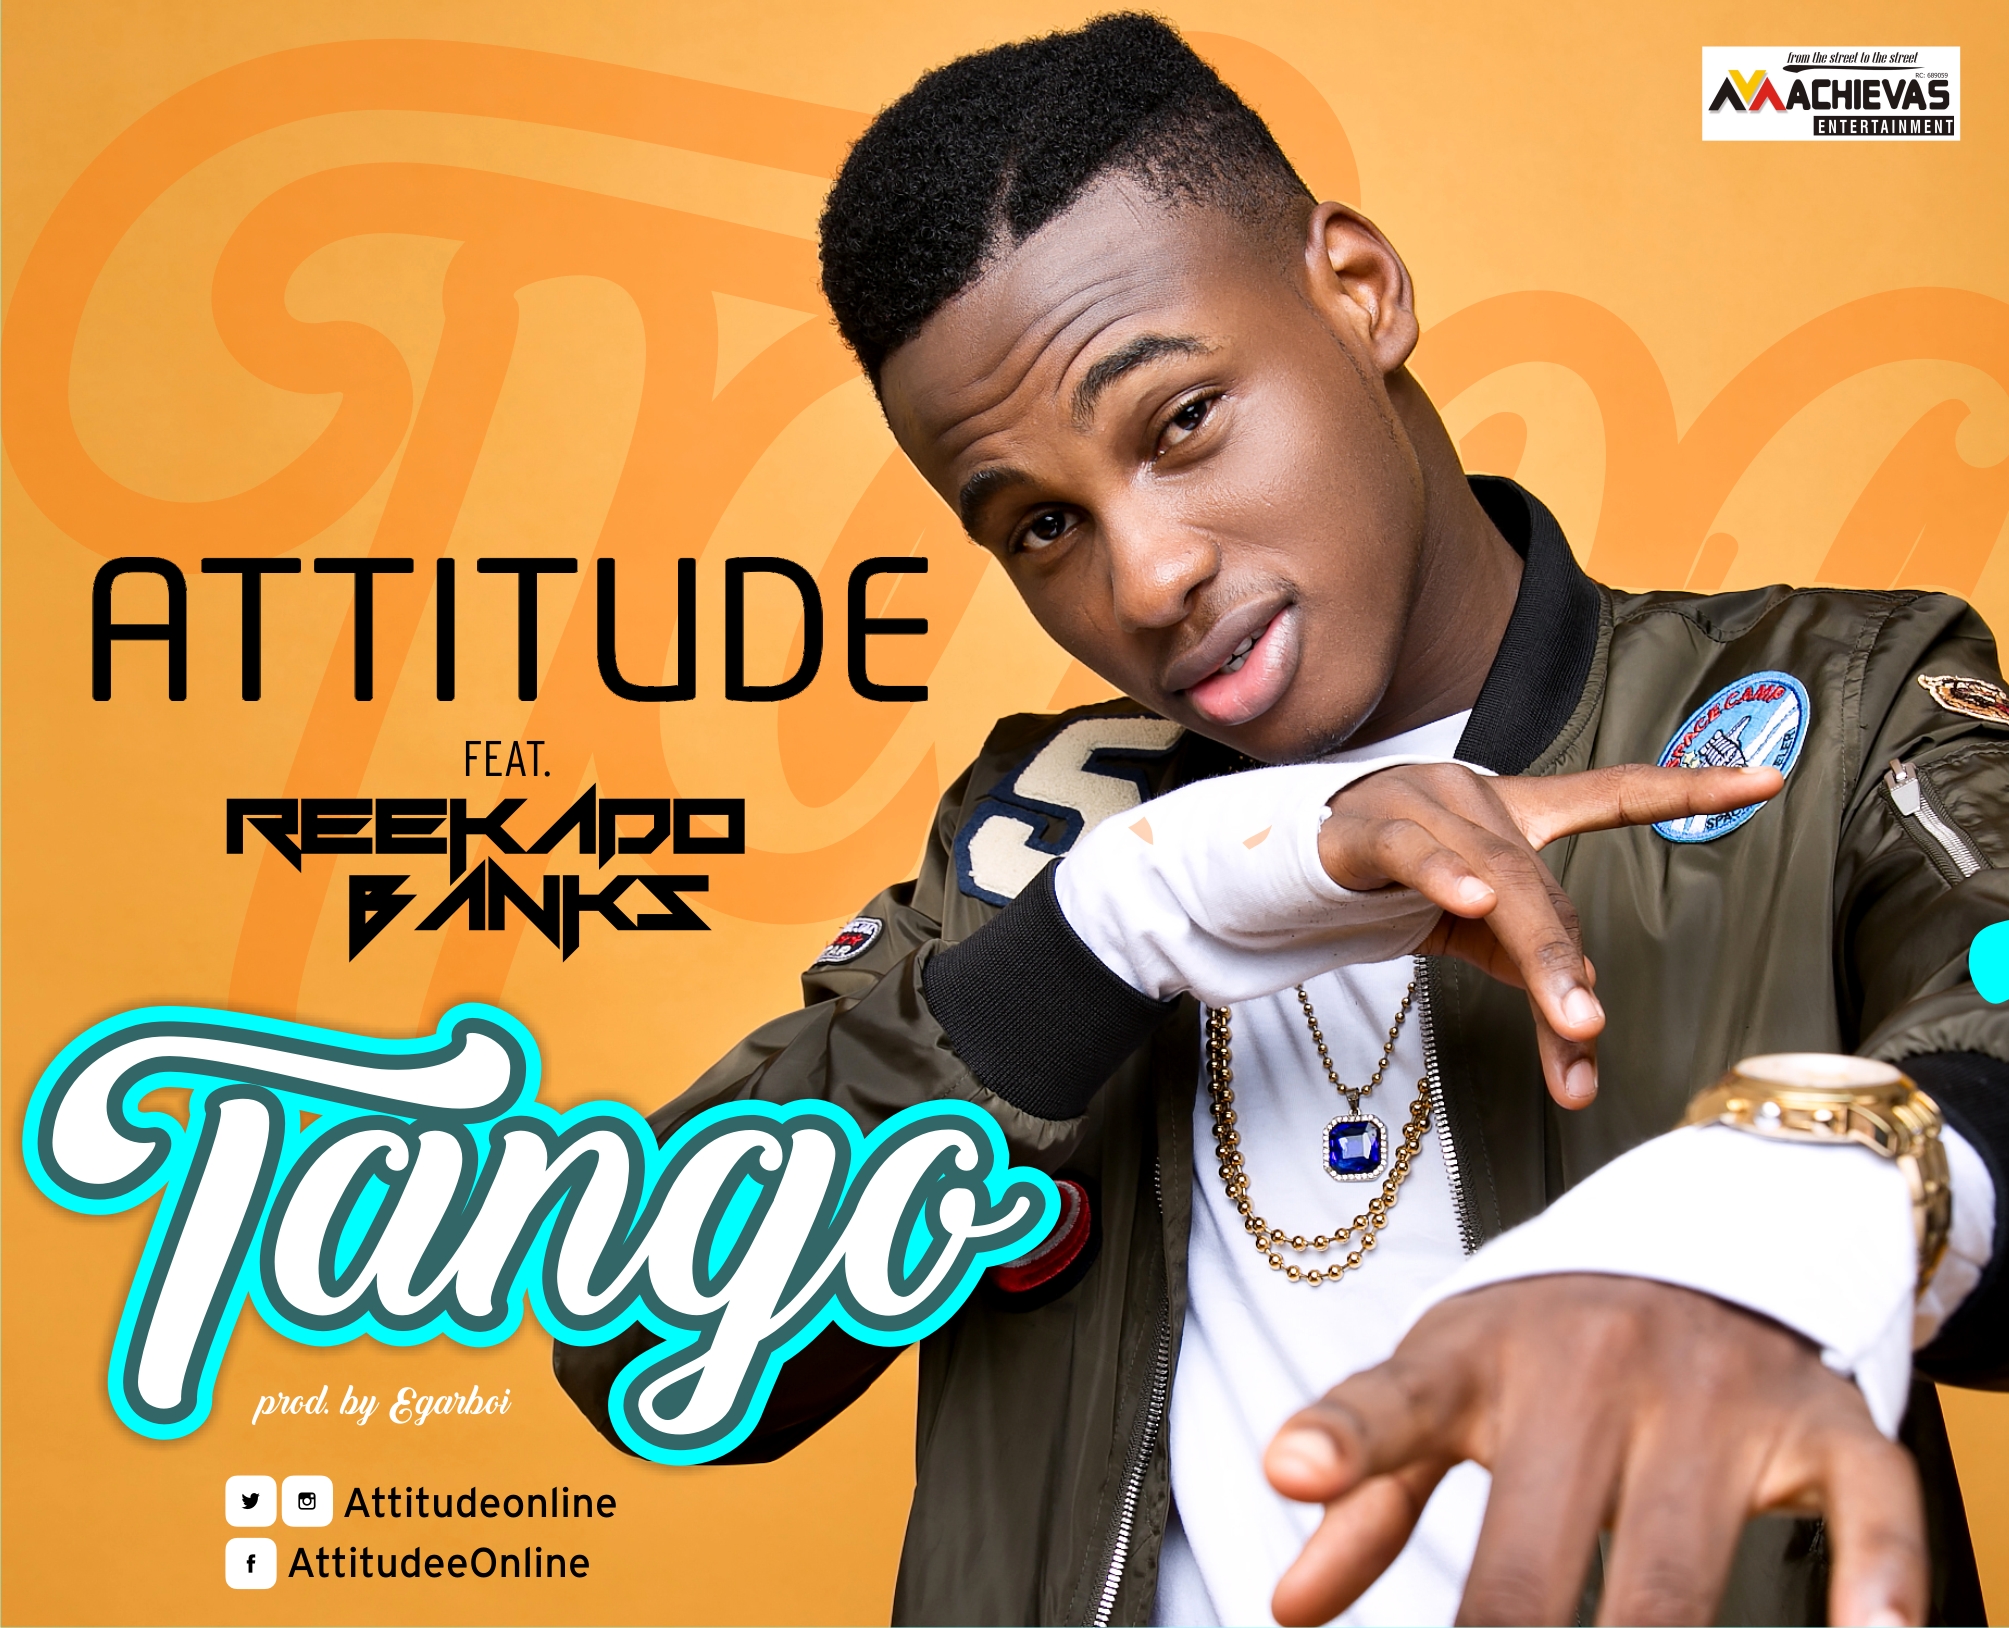 attitude-tango-ft-reekado-banks